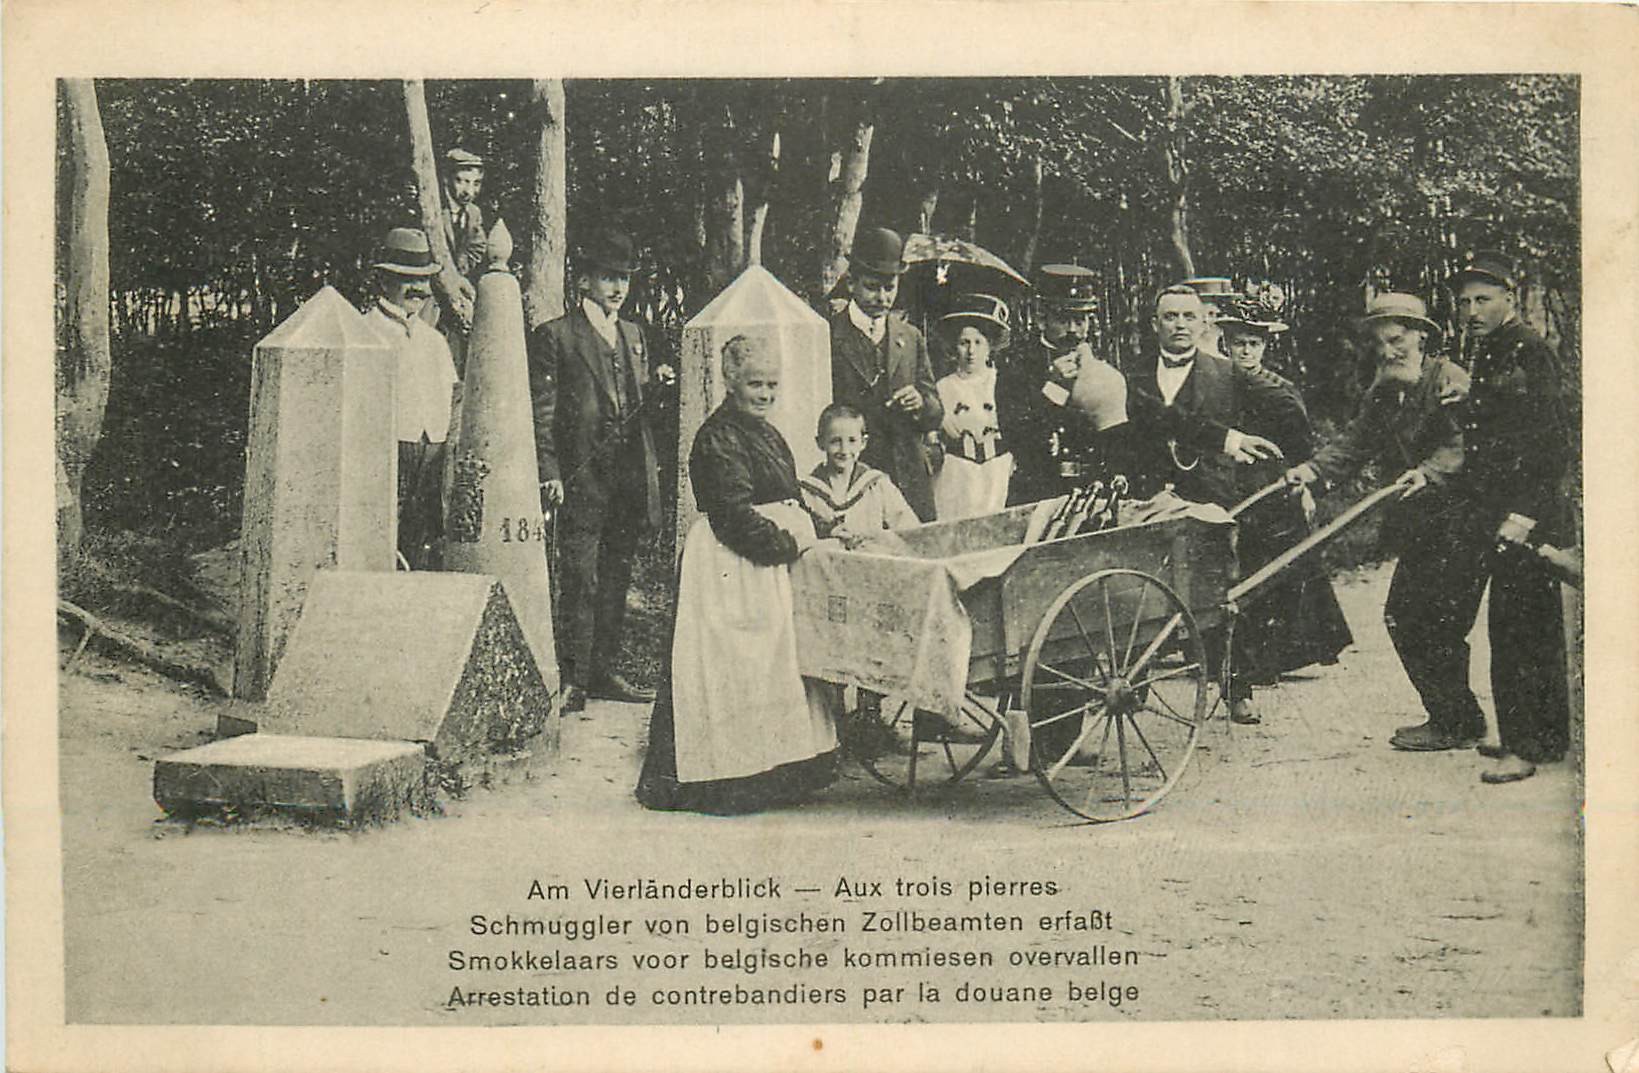 WW Am Vierländerblick. Arrestation de Contrebandiers par Douane belge 1918